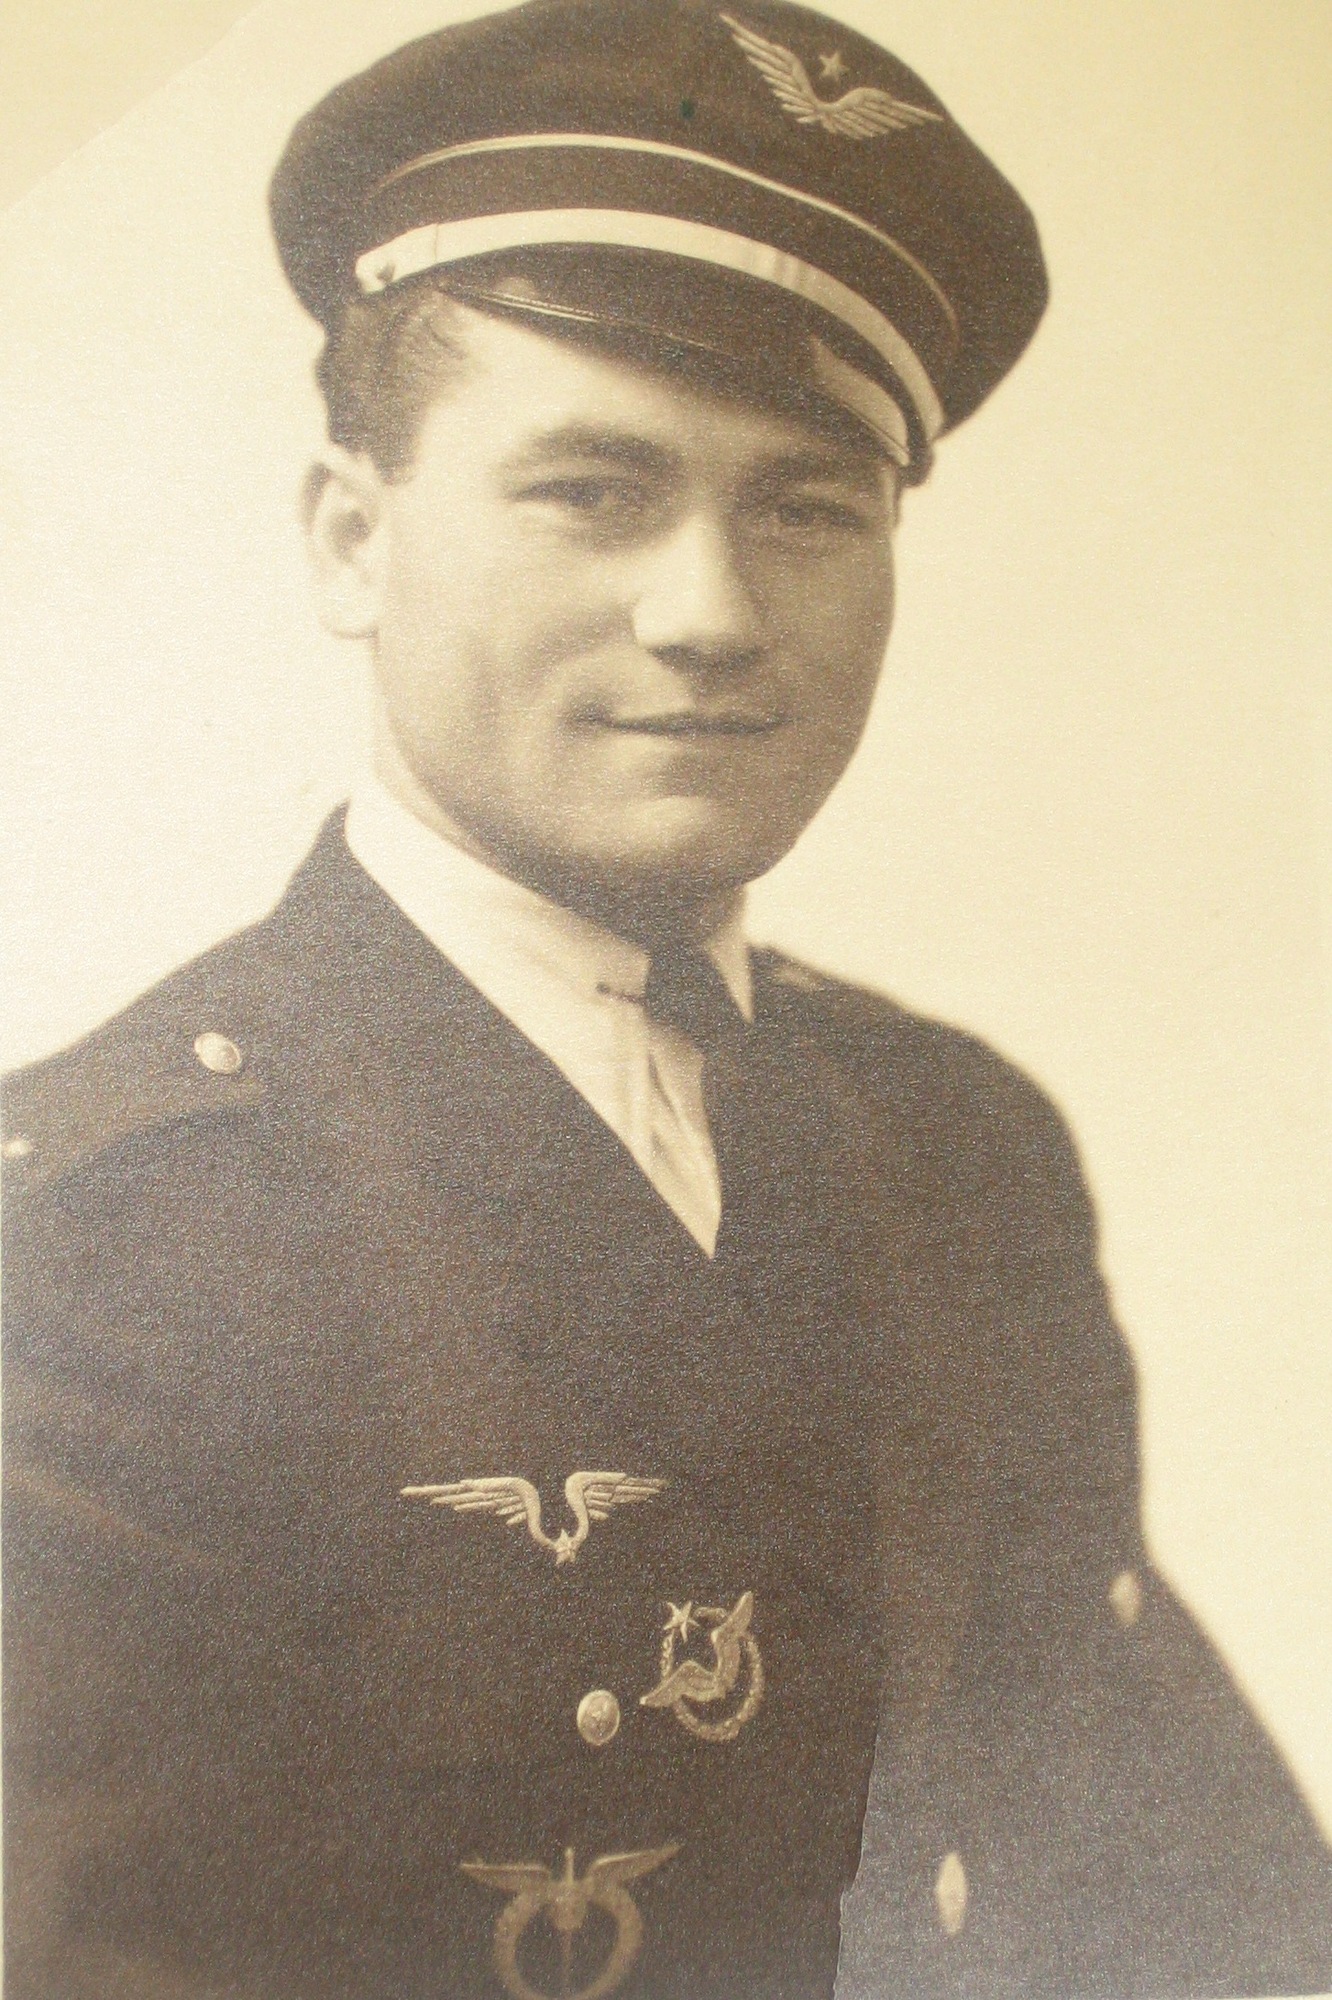 Ivan Schwarz in the RAF